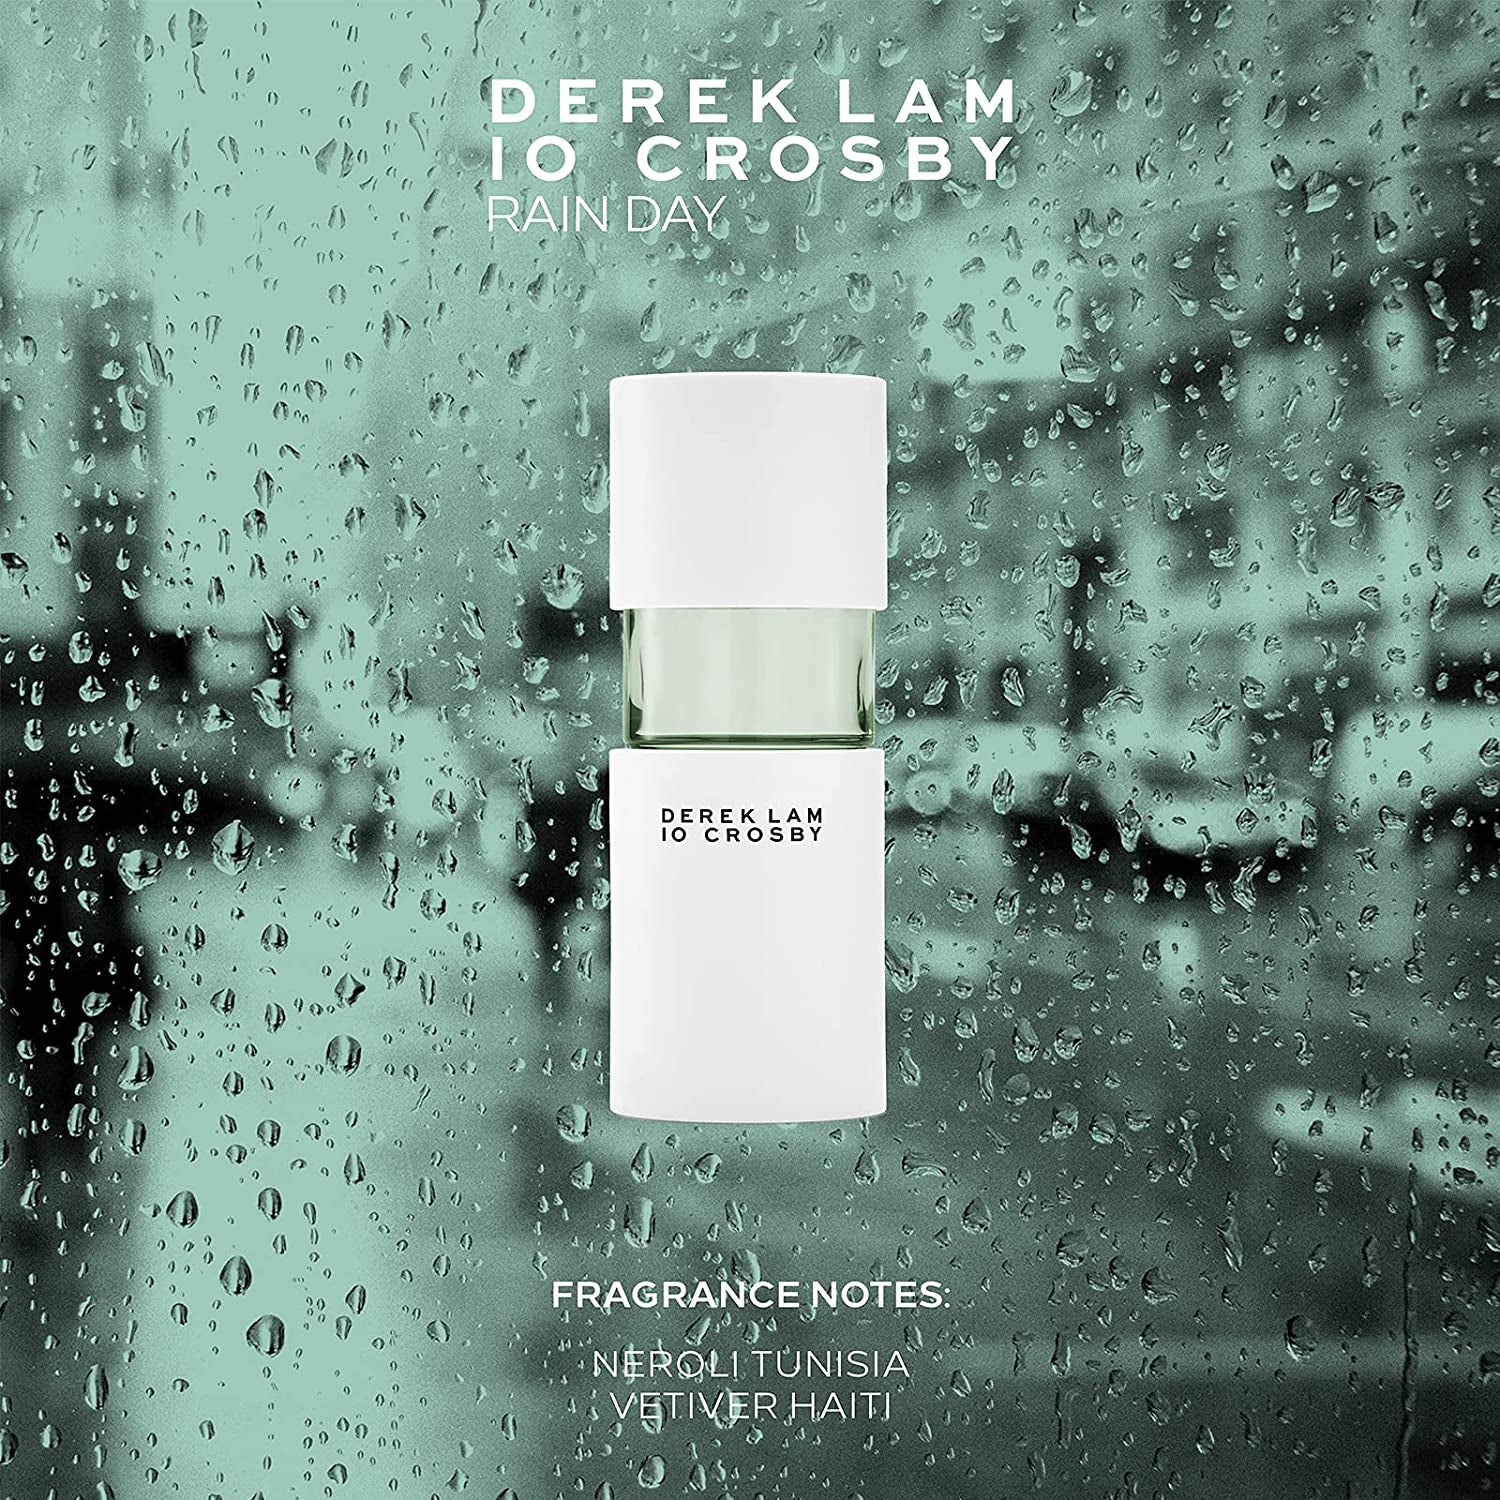 Derek Lam 10 Crosby - Rain Day - 1.7 Oz Eau De Parfum - A Refreshing, Light Fragrance Mist For Women - Perfume Spray With Citrusy Neroli And Green Vetiver Notes